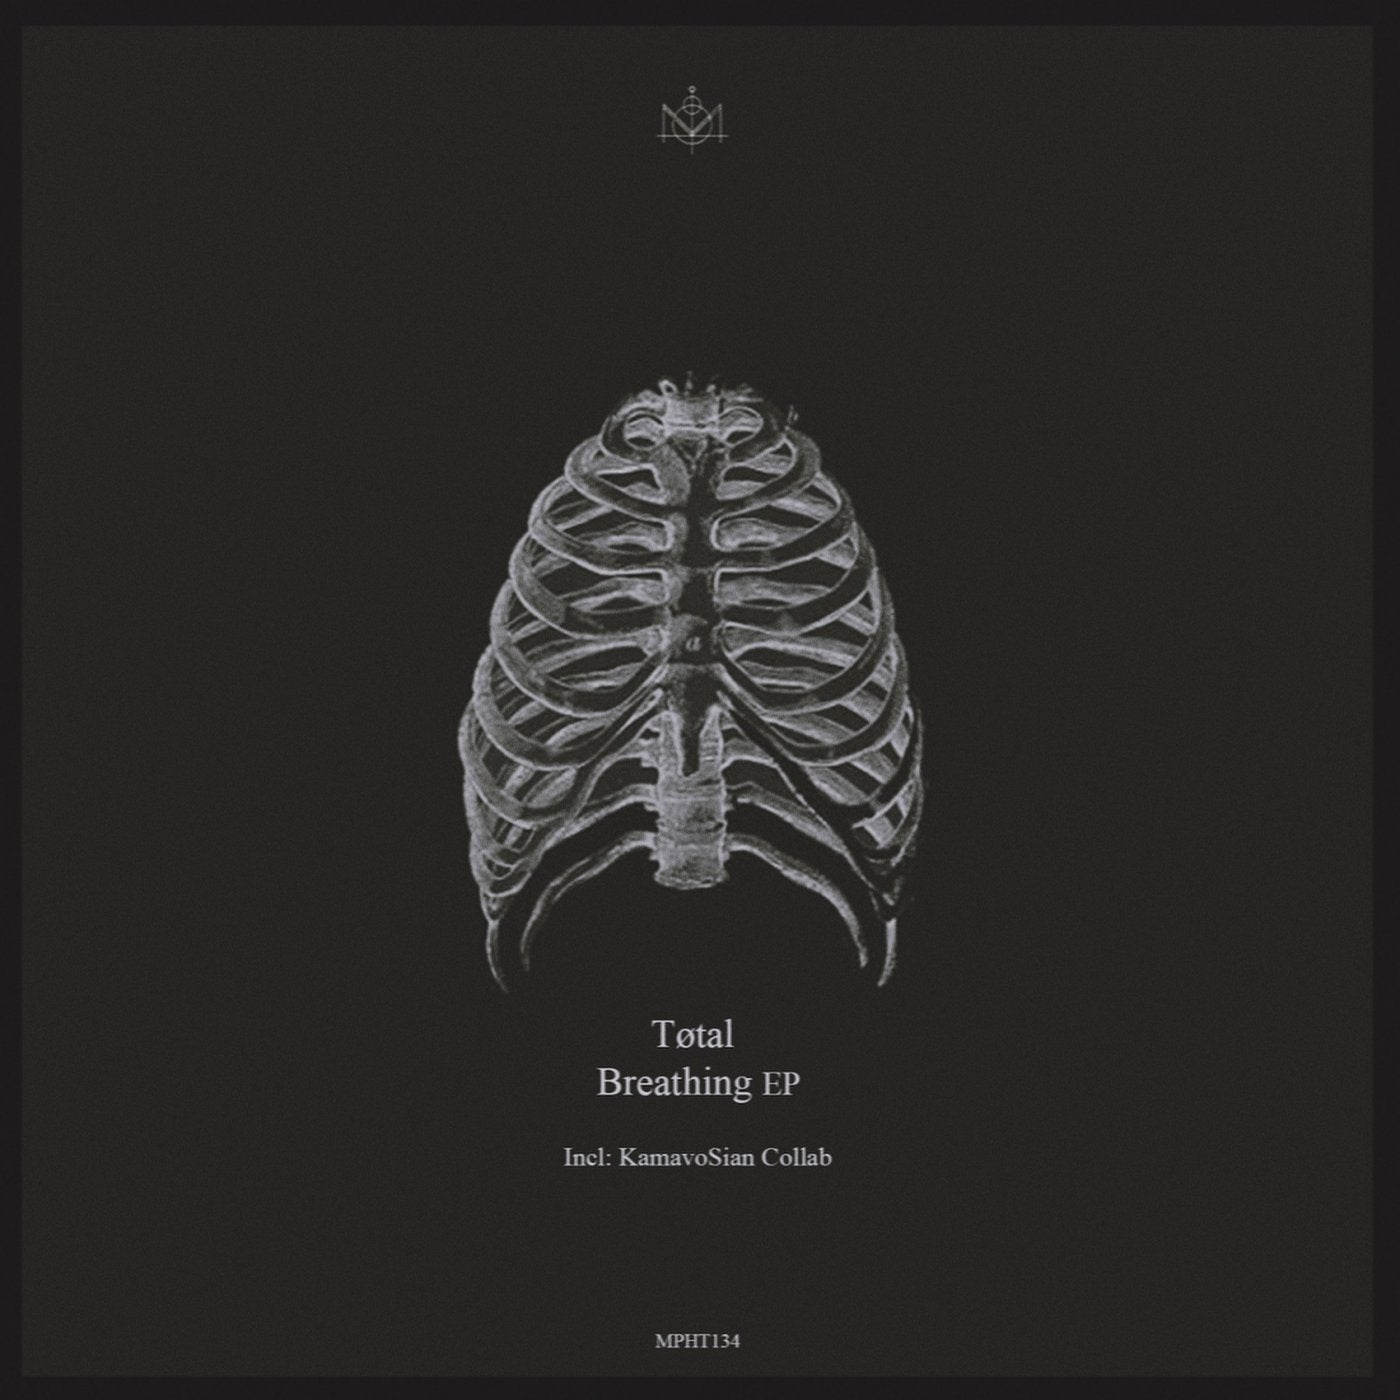 Breathing EP [Incl KamavoSian Collab]